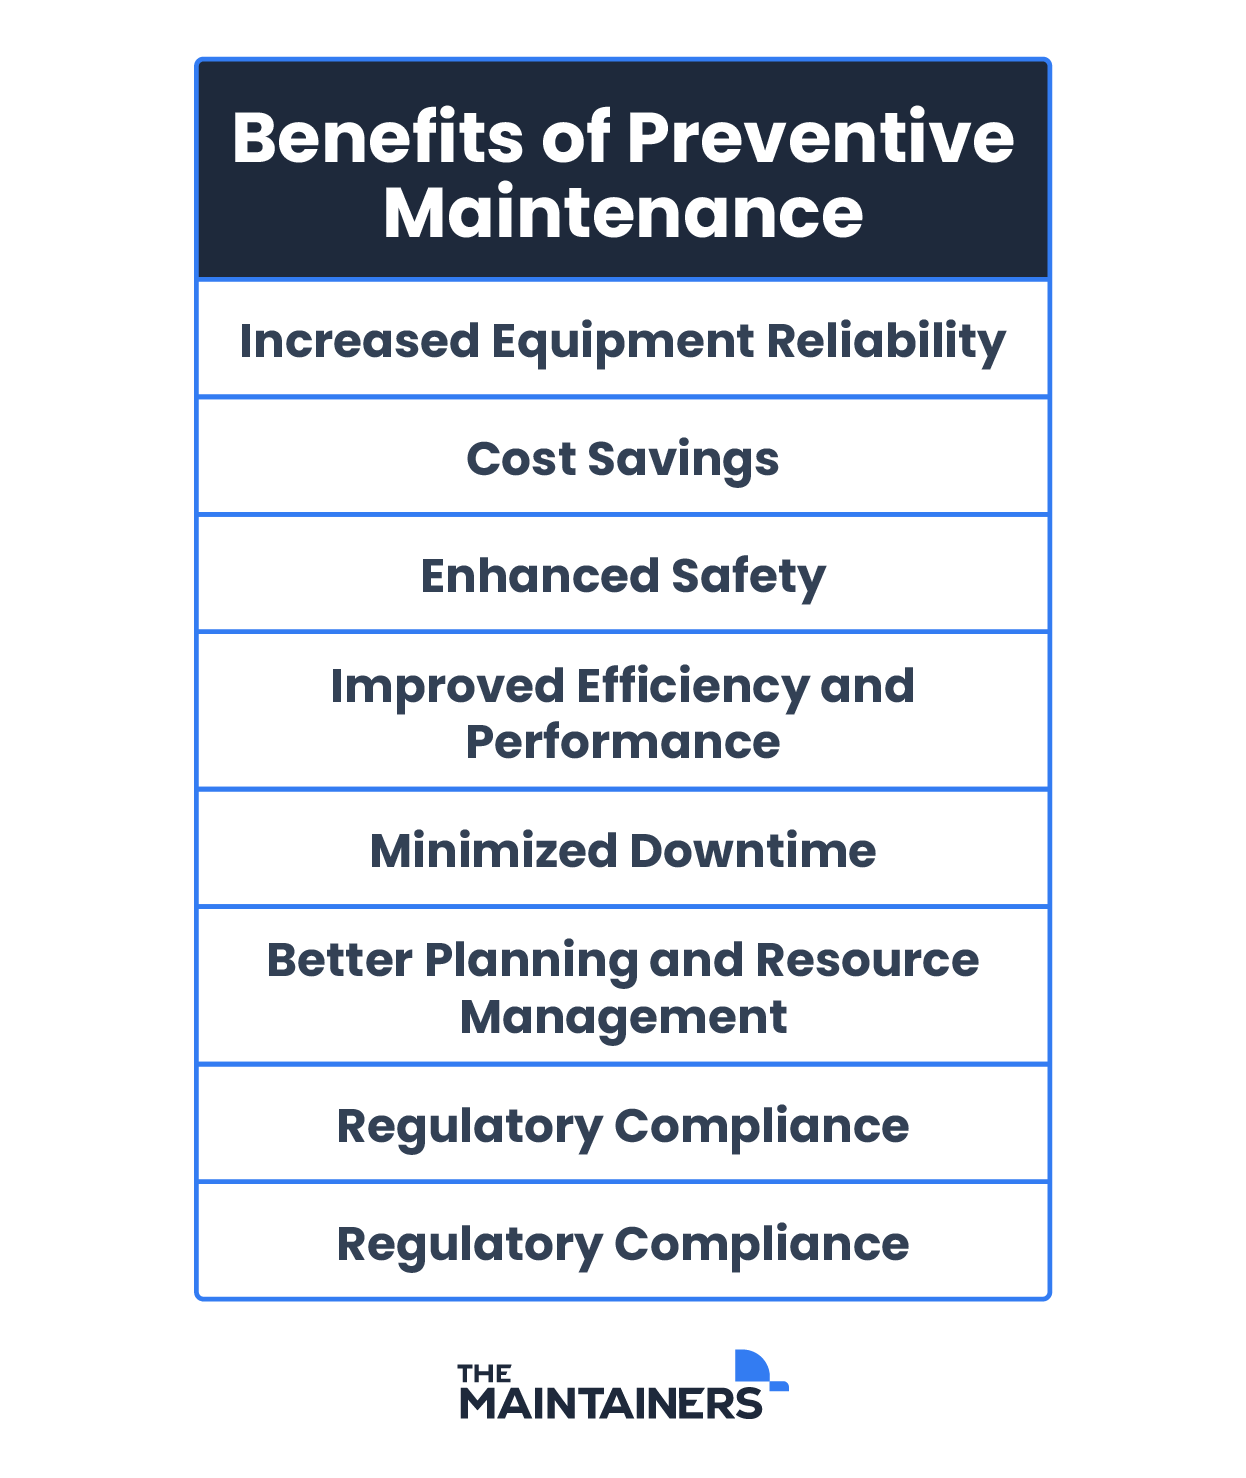 Preventive maintenance benefits